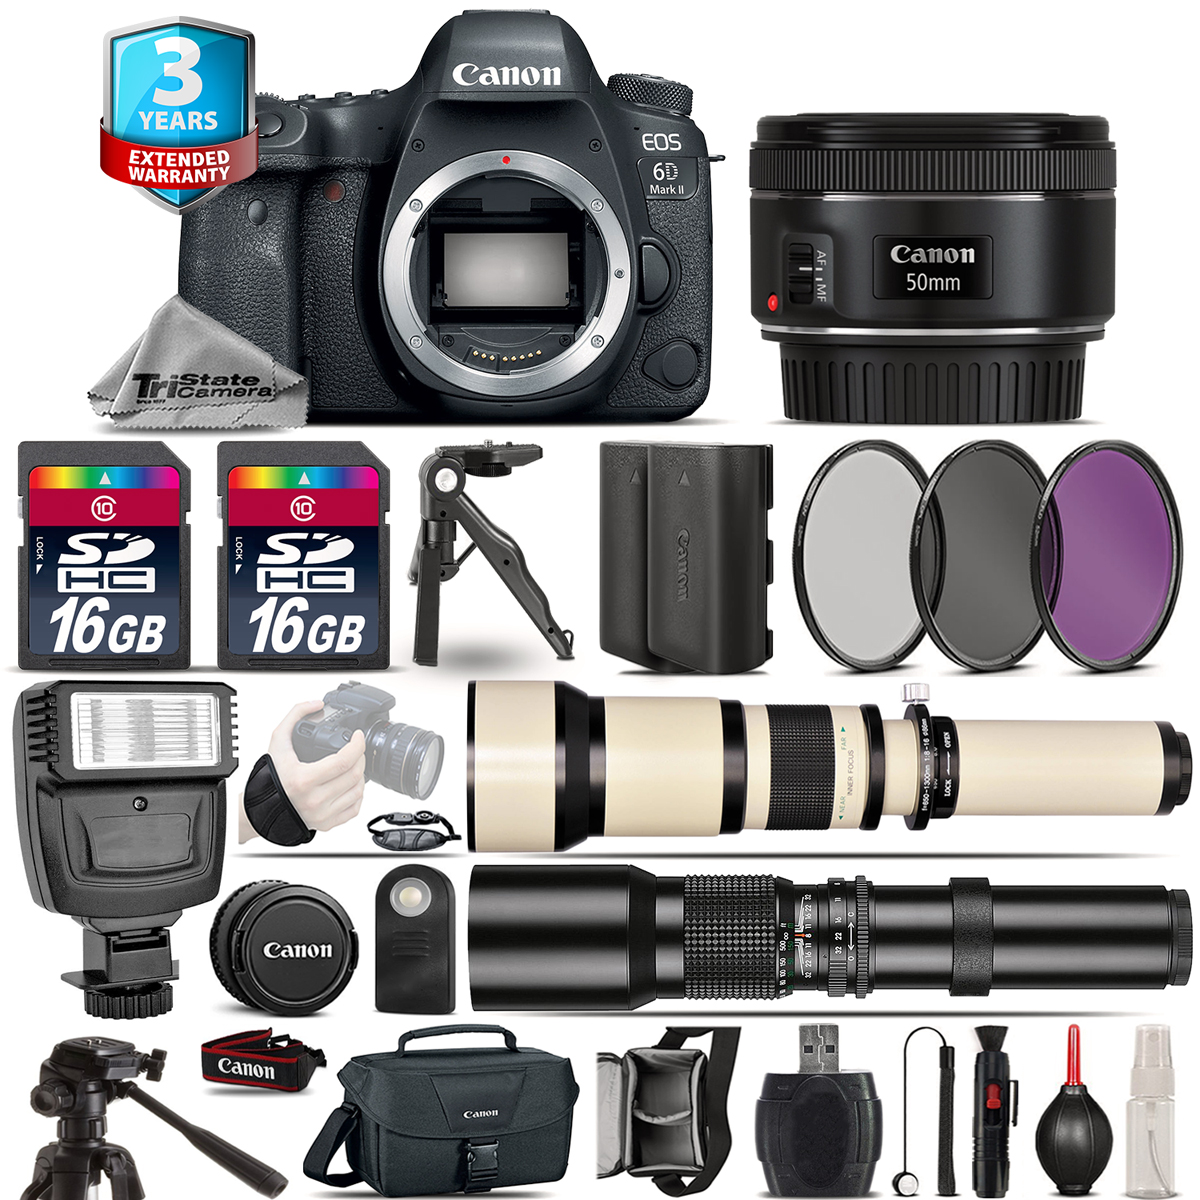 Canon EOS 6D Mark II Camera + 50mm - 3 Lens Kit + Flash + EXT BAT + 3yr Warranty - image 1 of 11